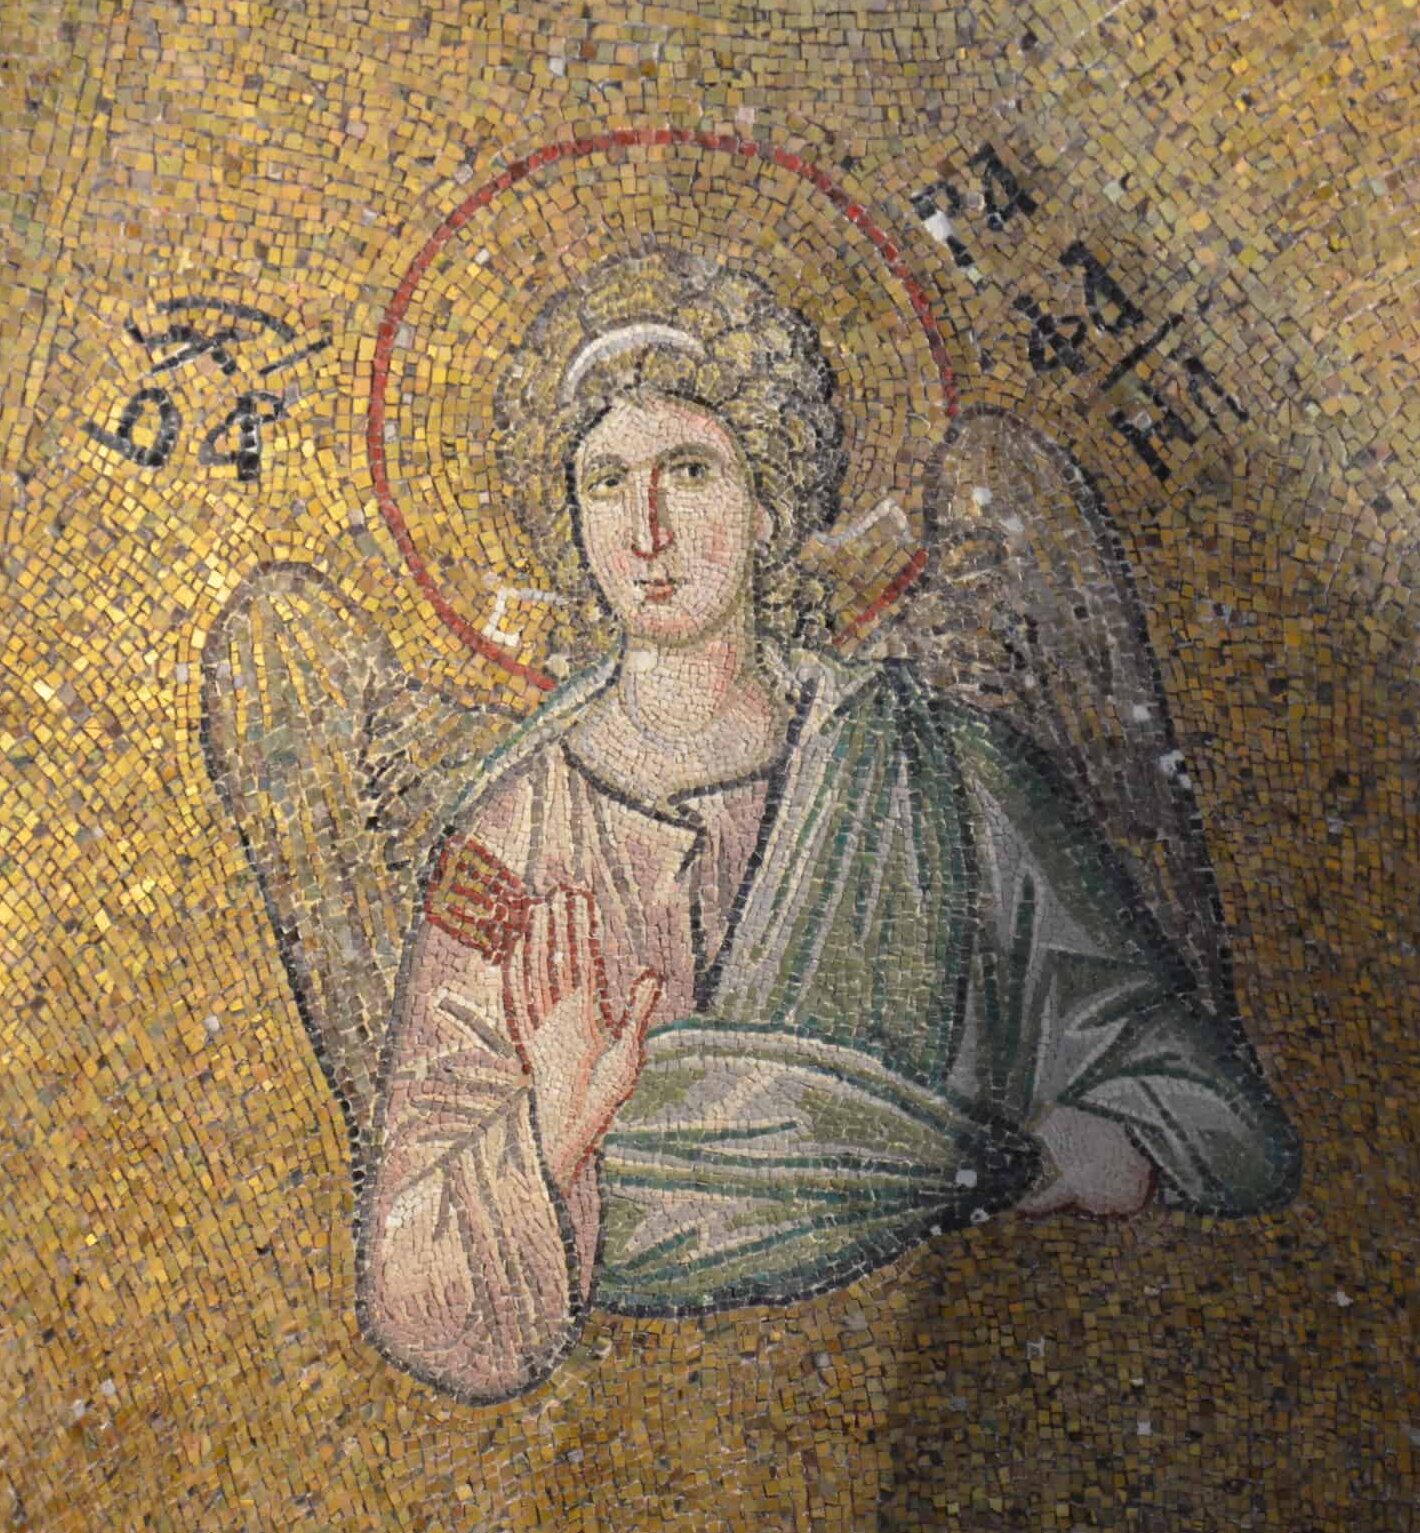 Archangel Raphael at the Pammakaristos Church in Istanbul, Turkey